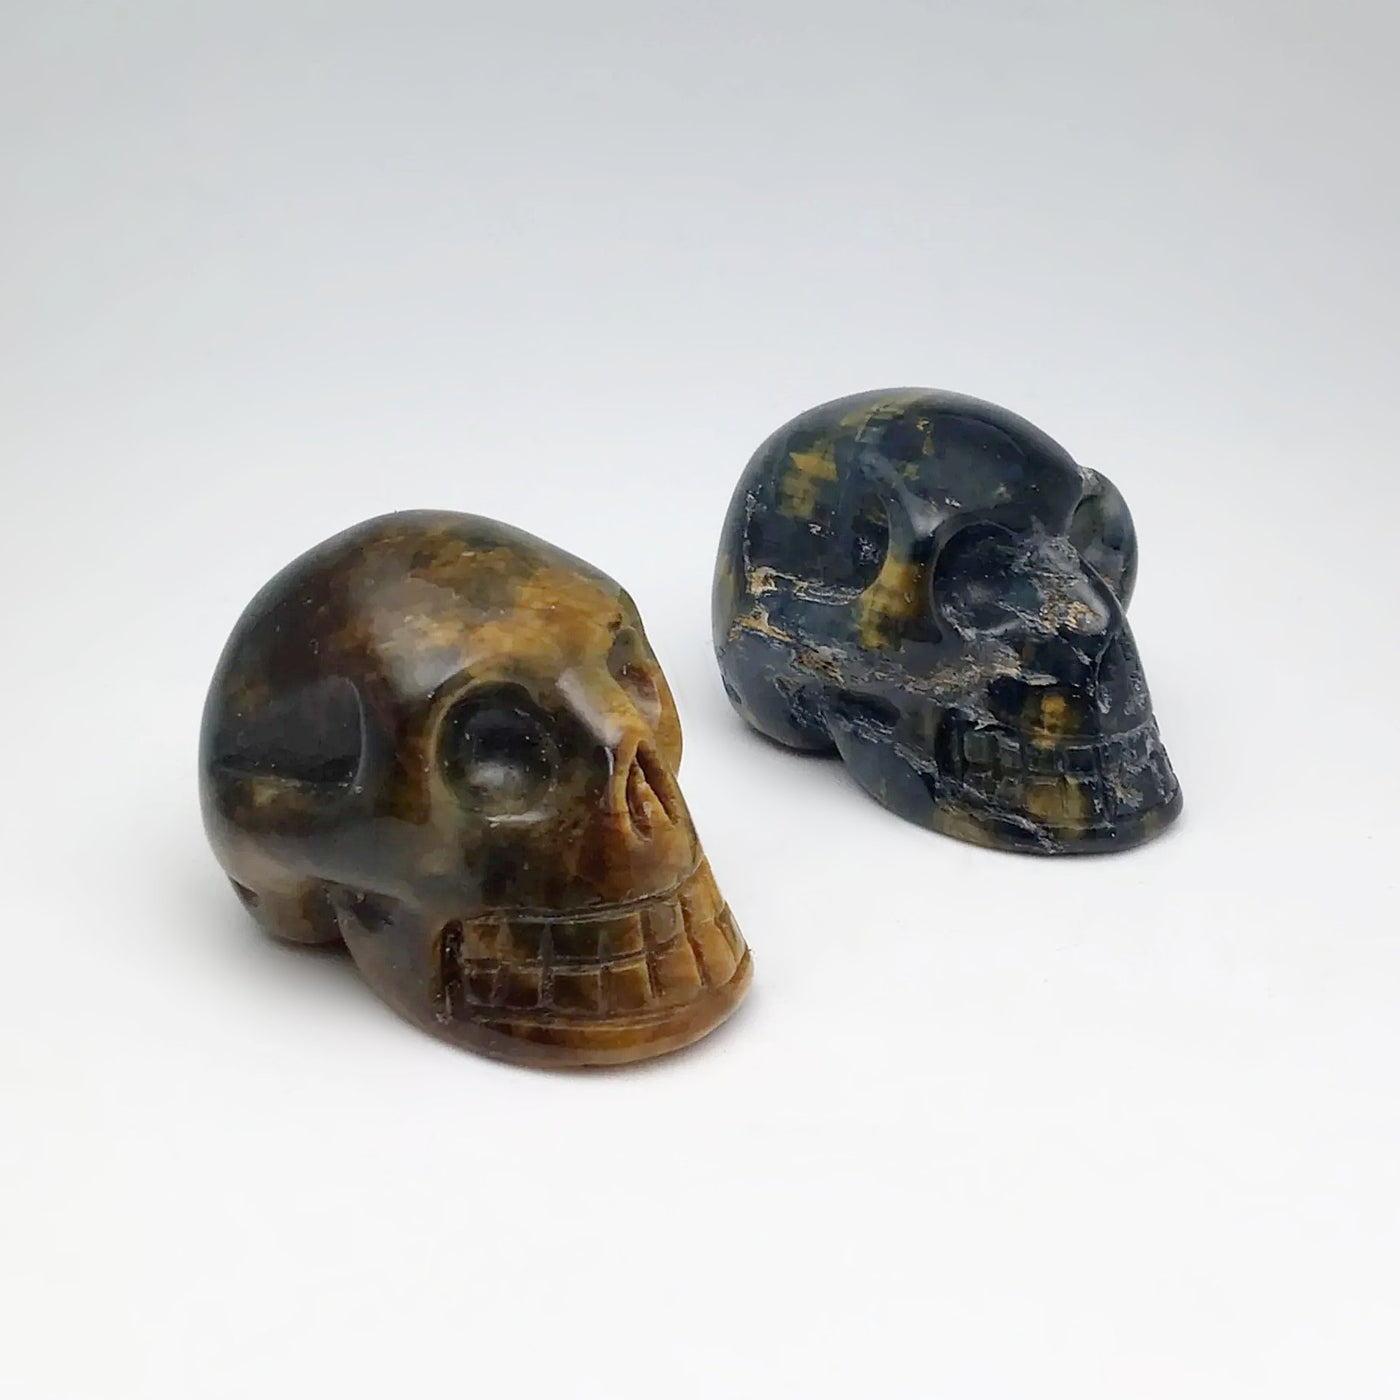 Carved Tiger Eye Skull at $69 Each